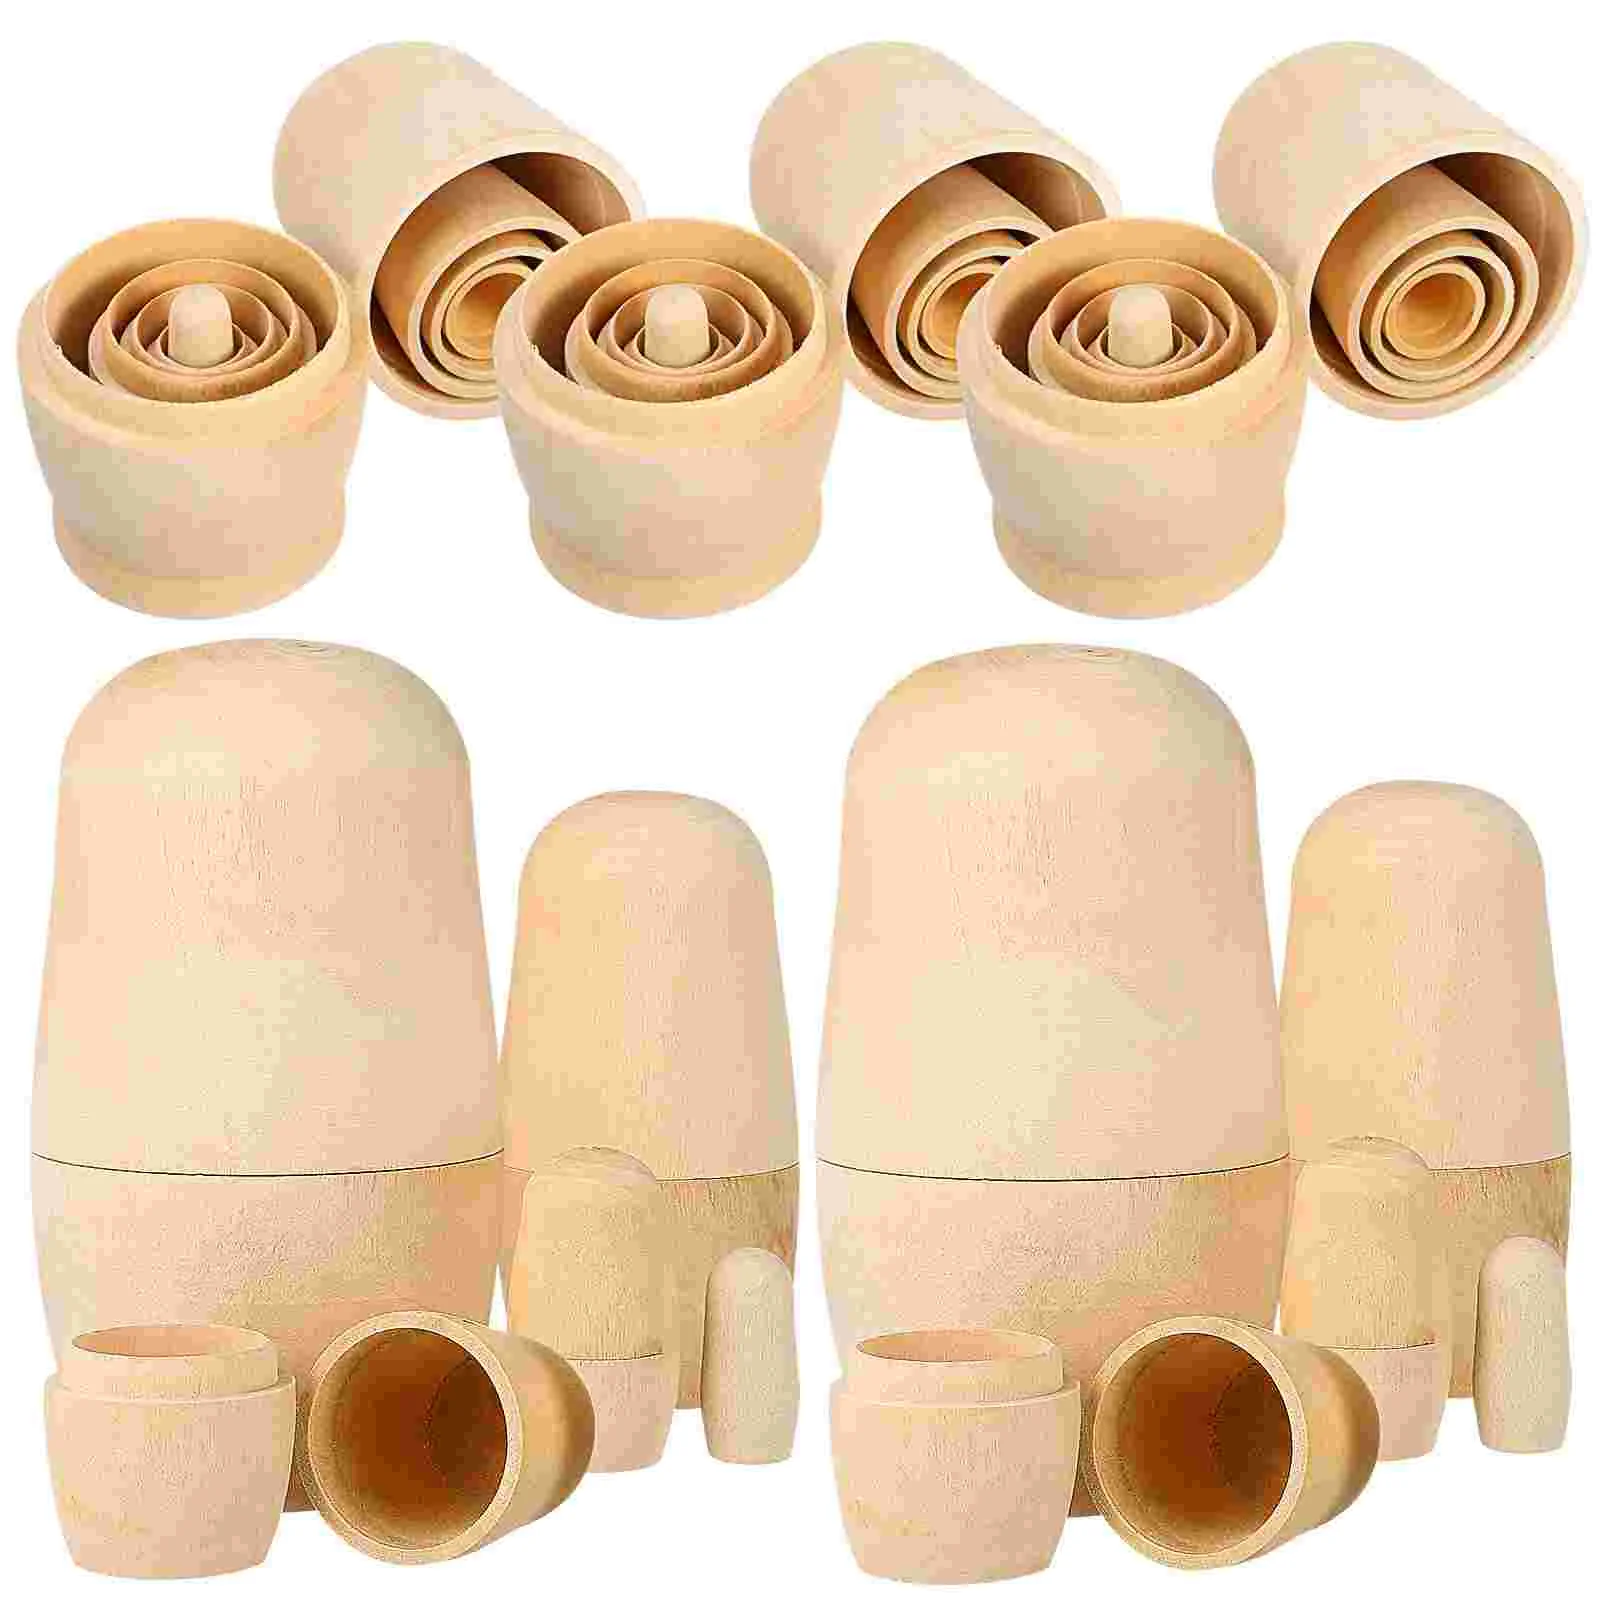 

10 Sets Matryoshka Wooden Nesting Russian Toy Decor Plain Toddler Baby Kids Painting Blank Shapes